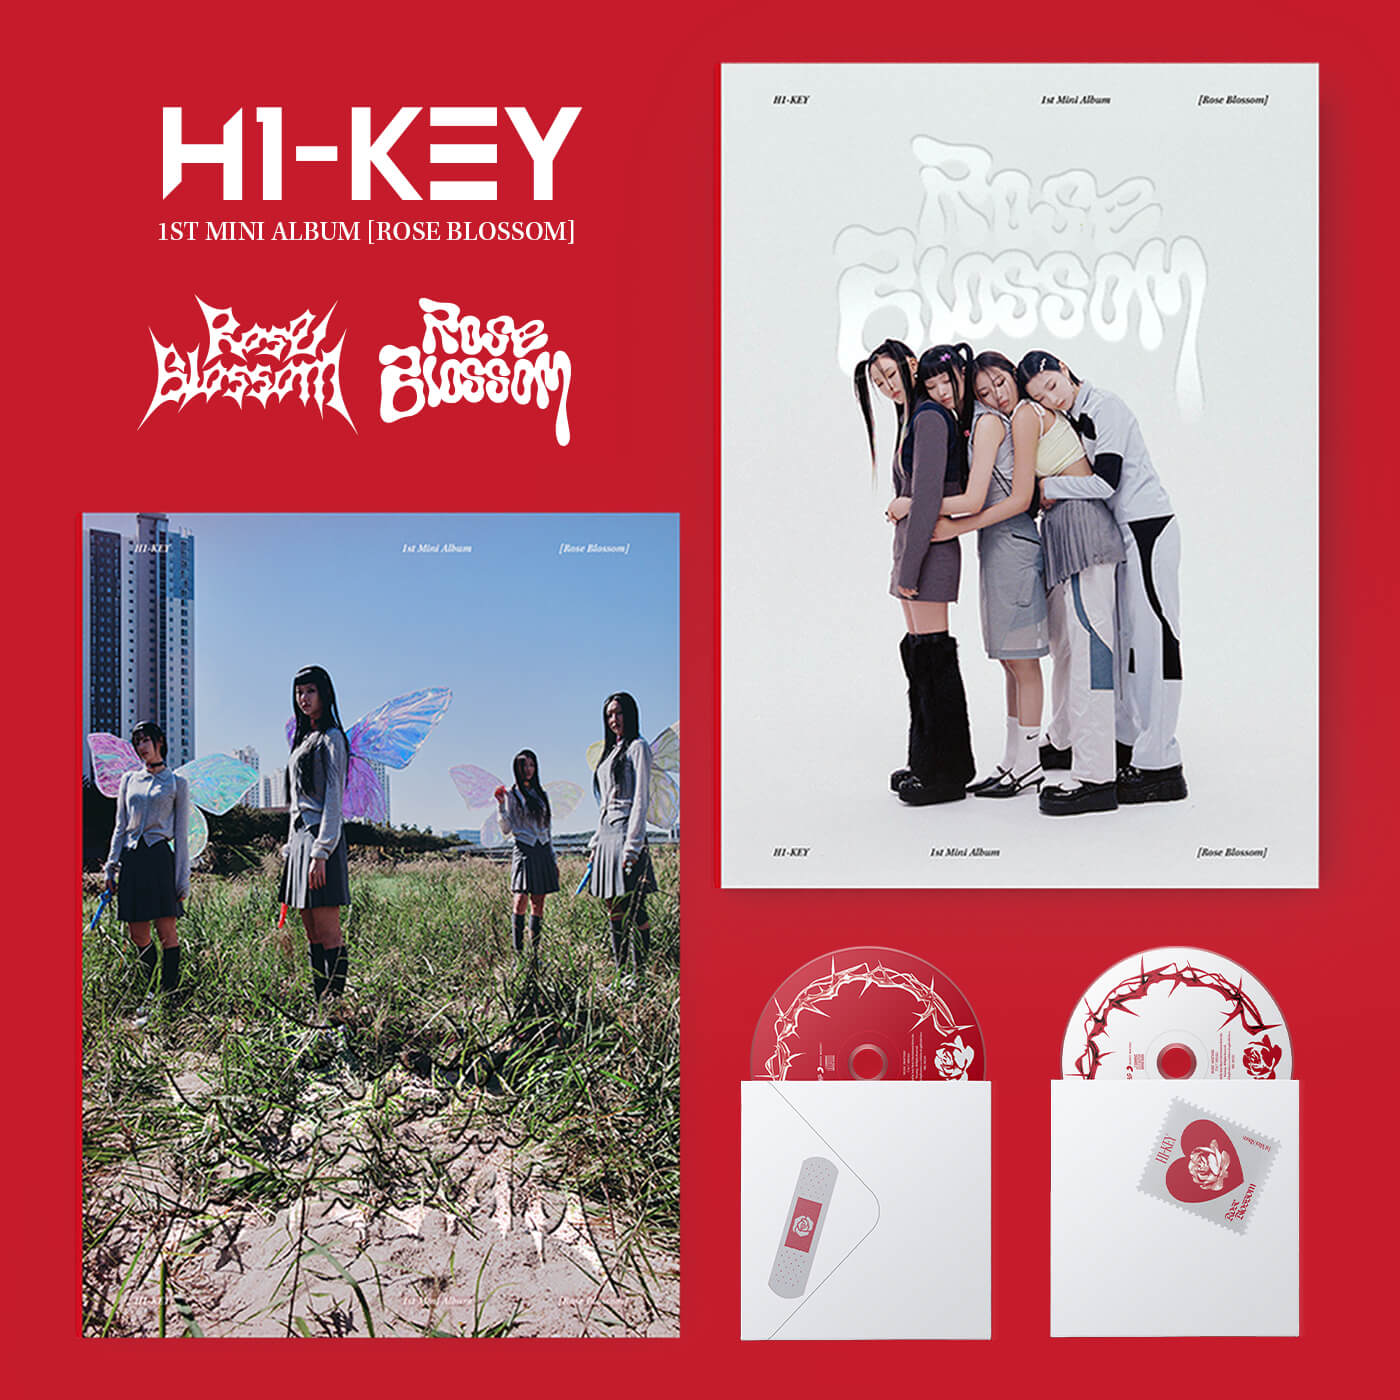 H1-KEY 1st Mini Album Rose Blossom - A / B Version